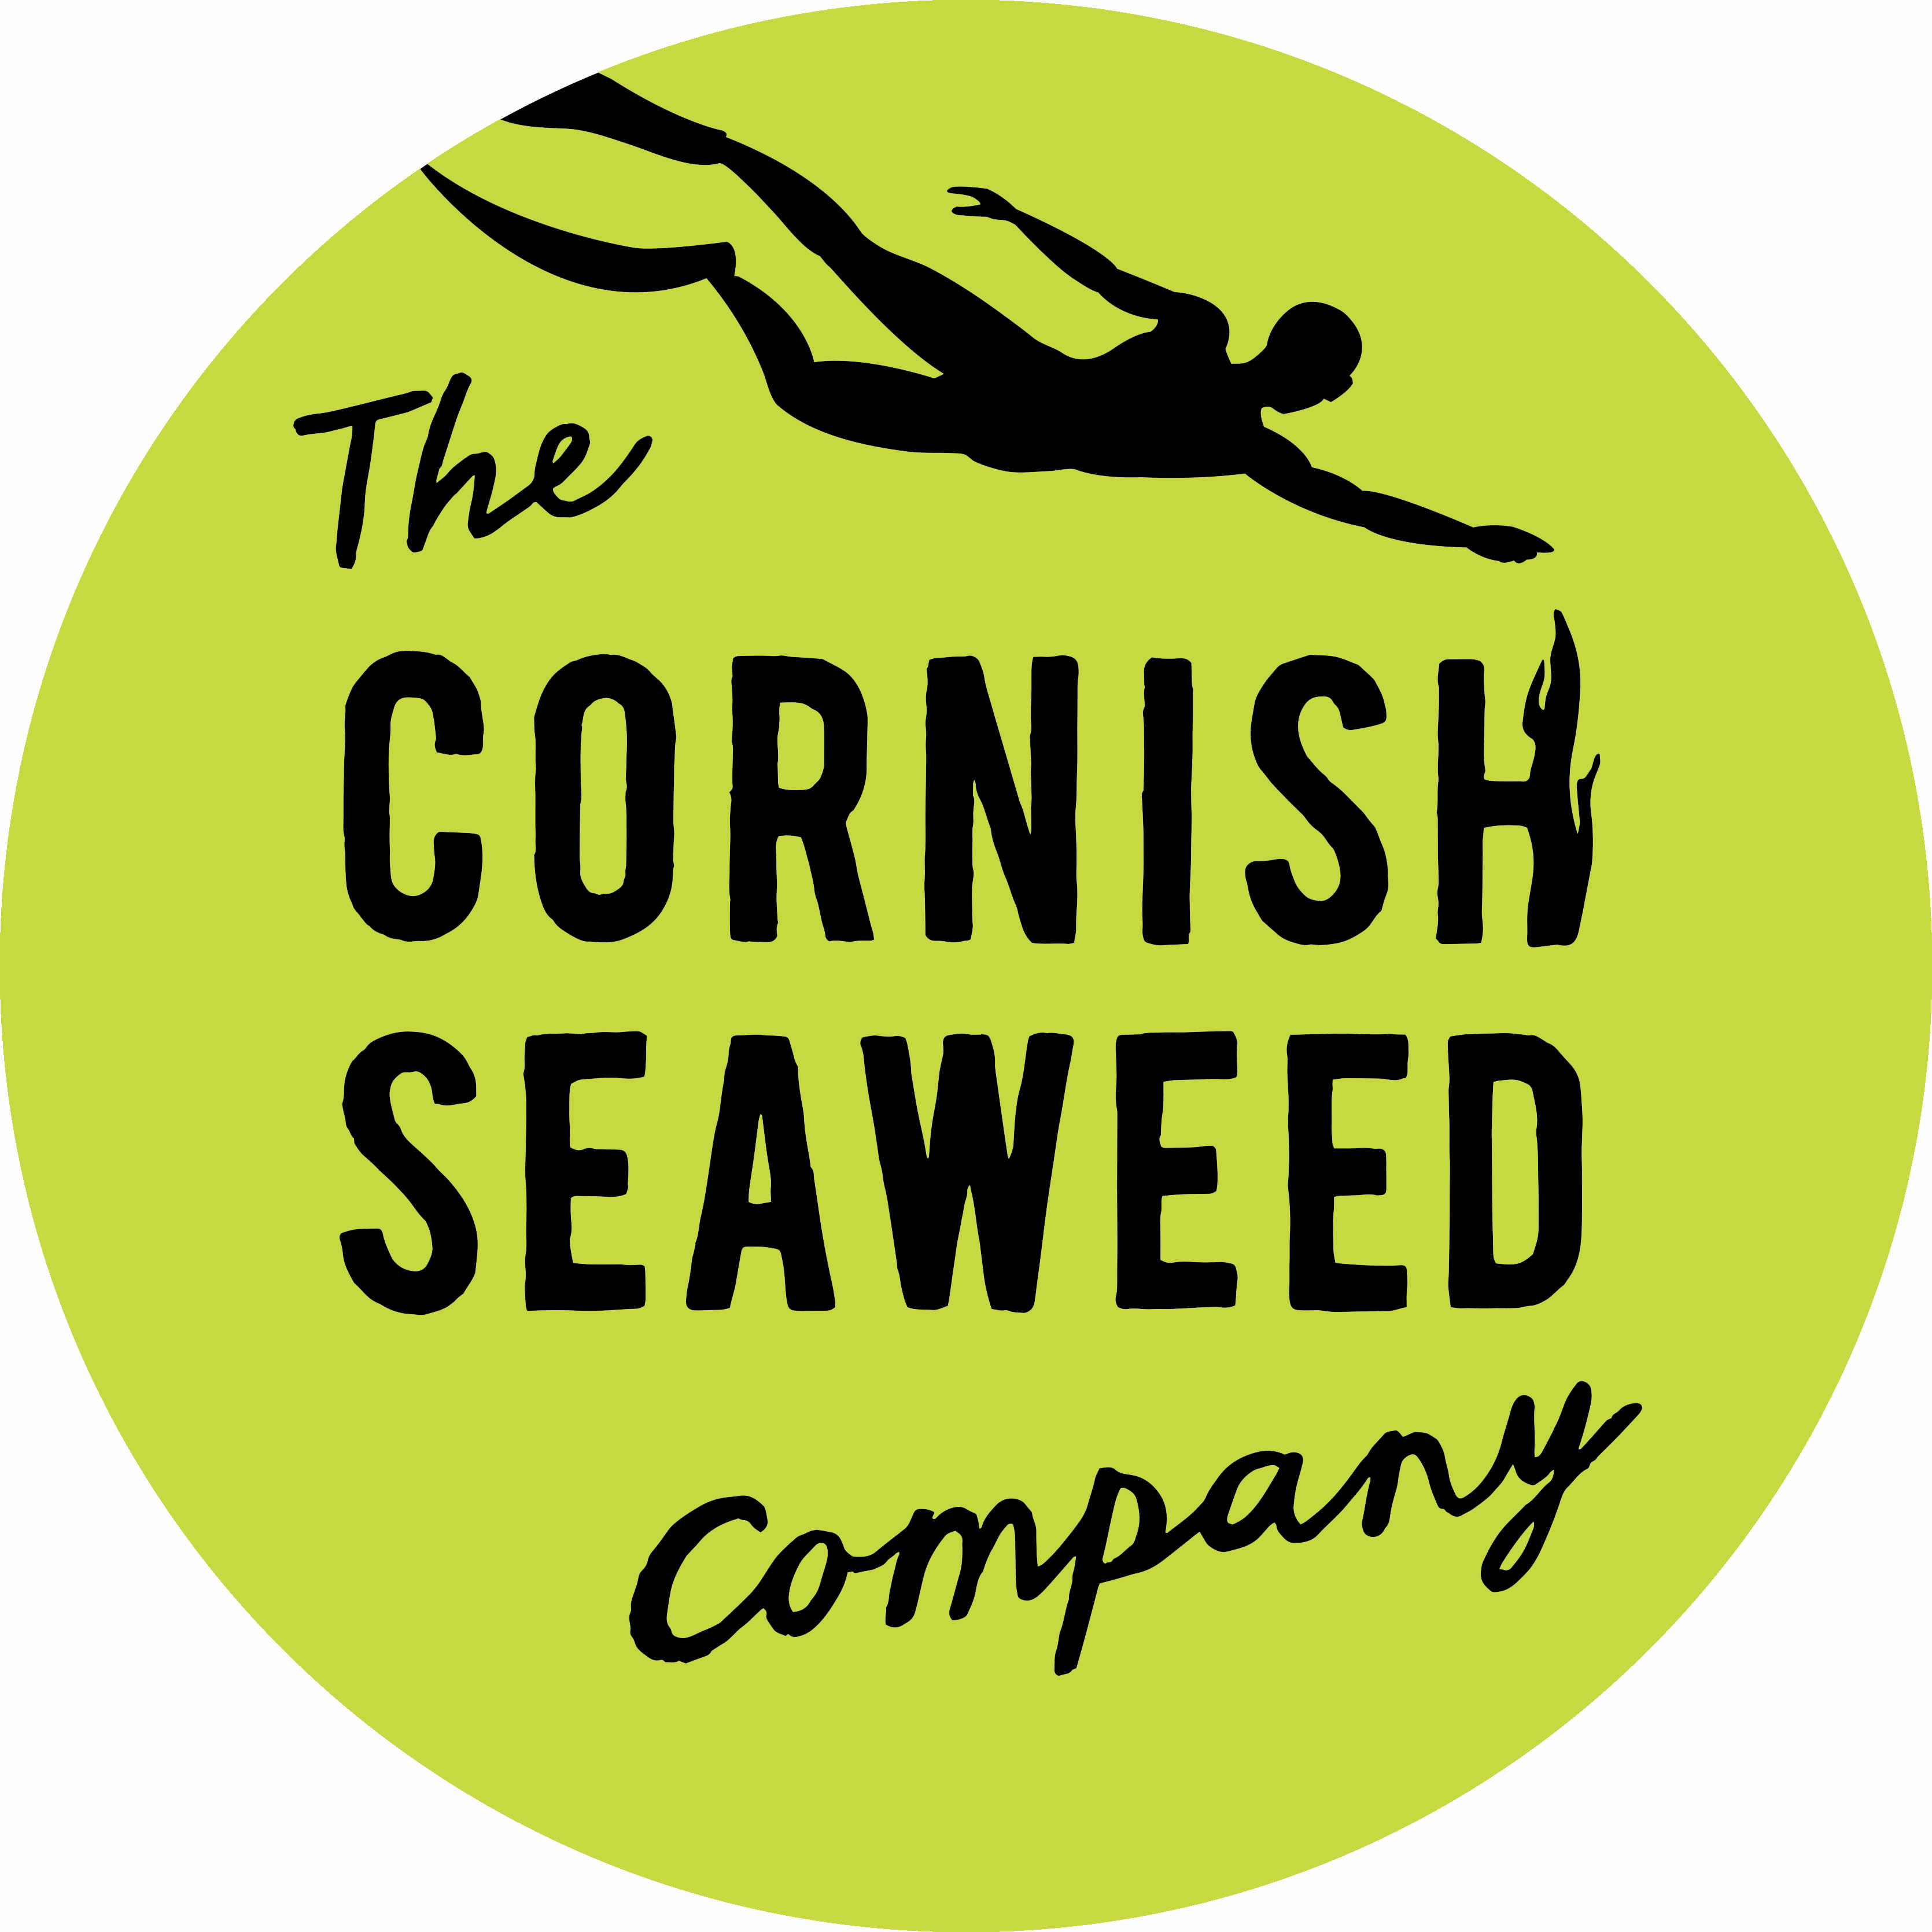 Cornish Seaweed Company